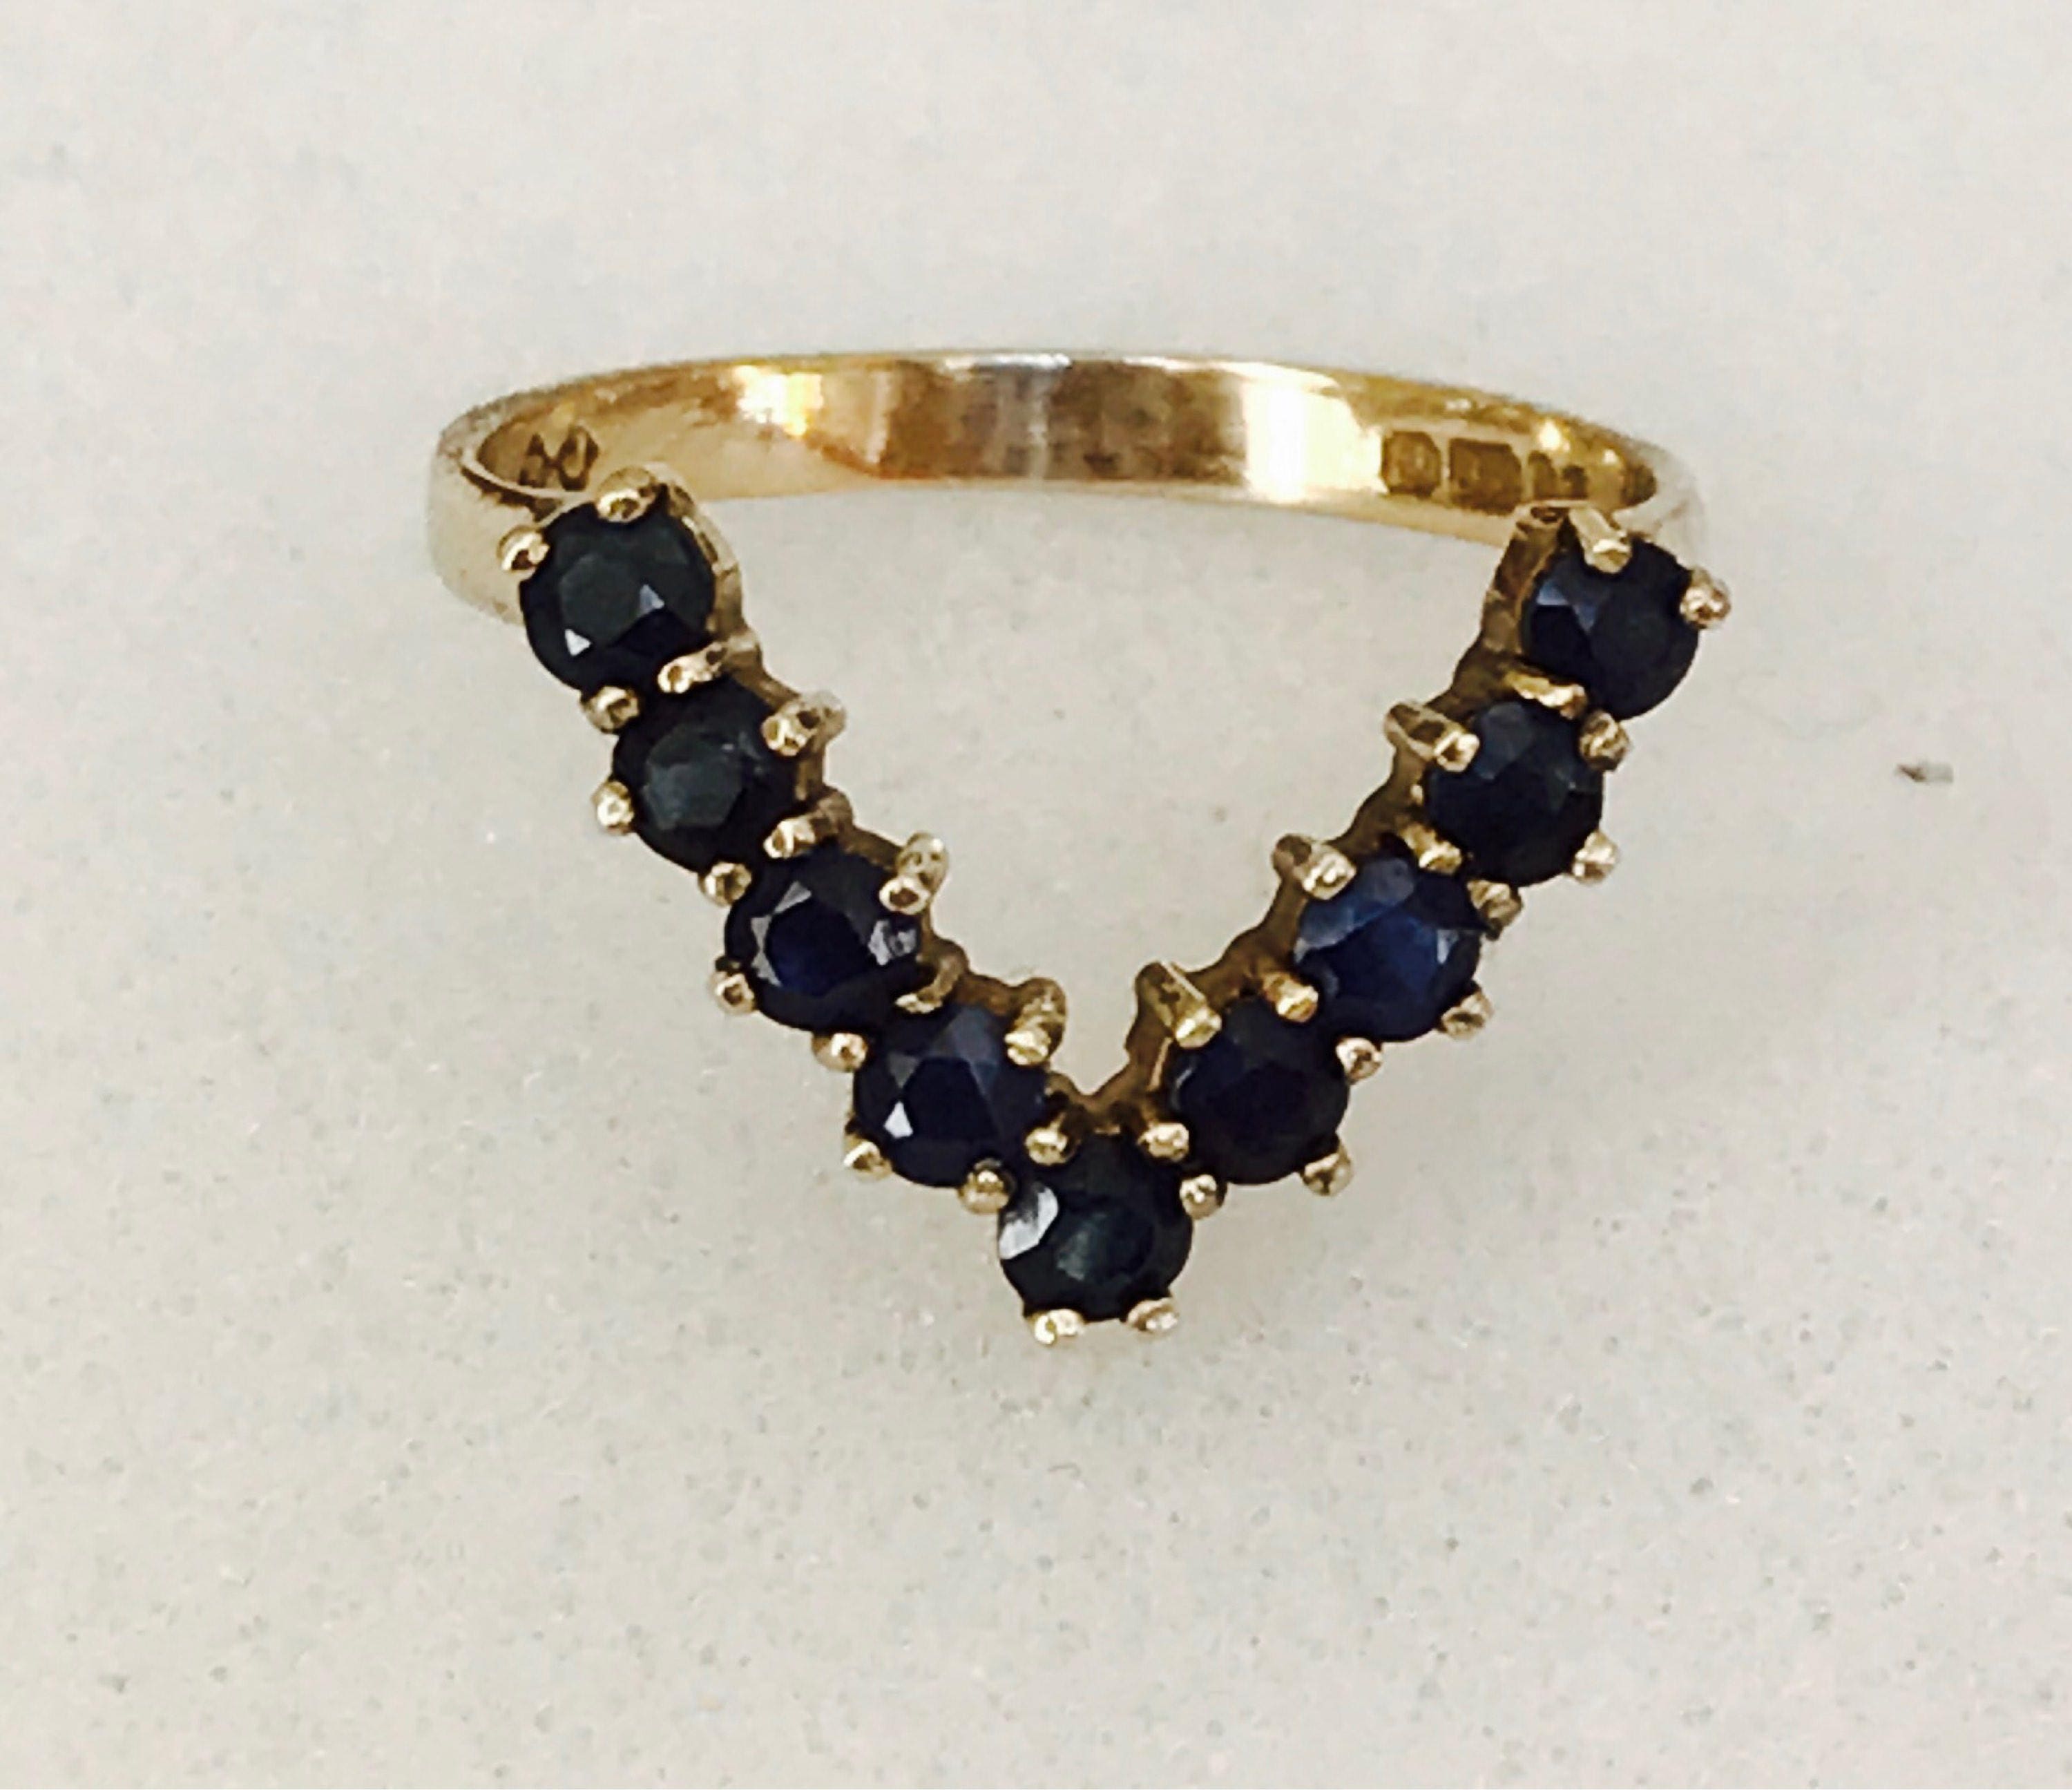 Stunning vintage 9ct gold blue sapphire wishbone ring - Birmingham 1976